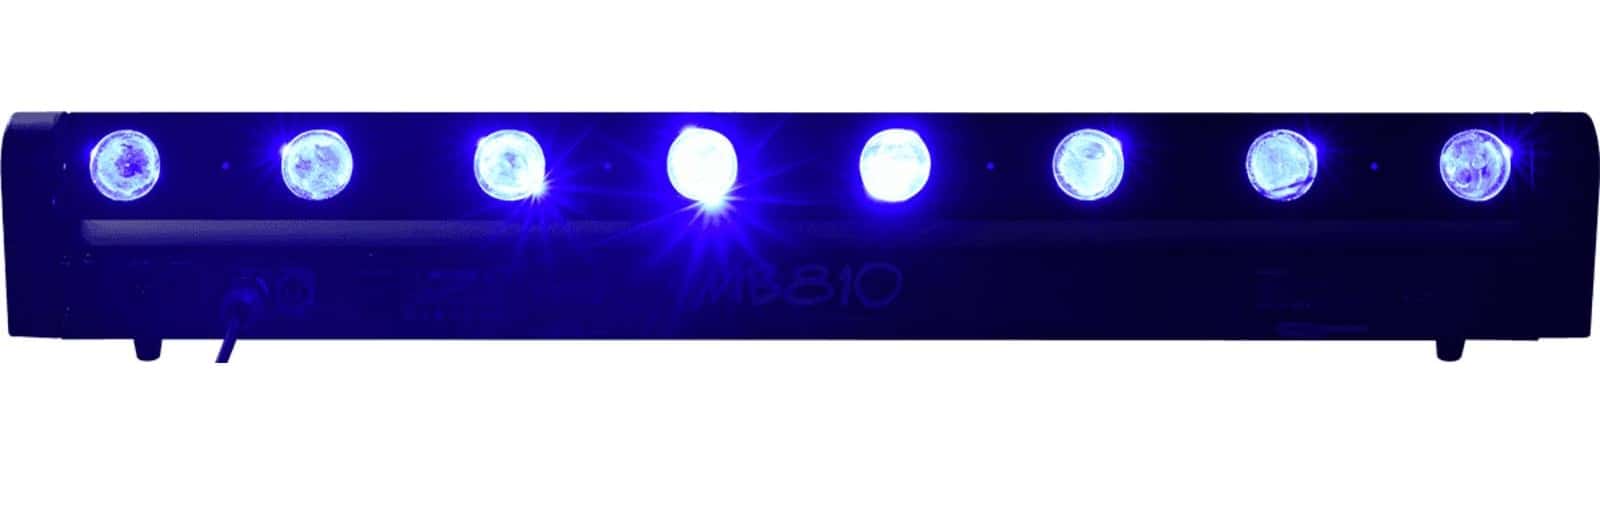 ALGAM LIGHTING MB 810 - BARRA LED MOTORIZZATA 8 RGBW